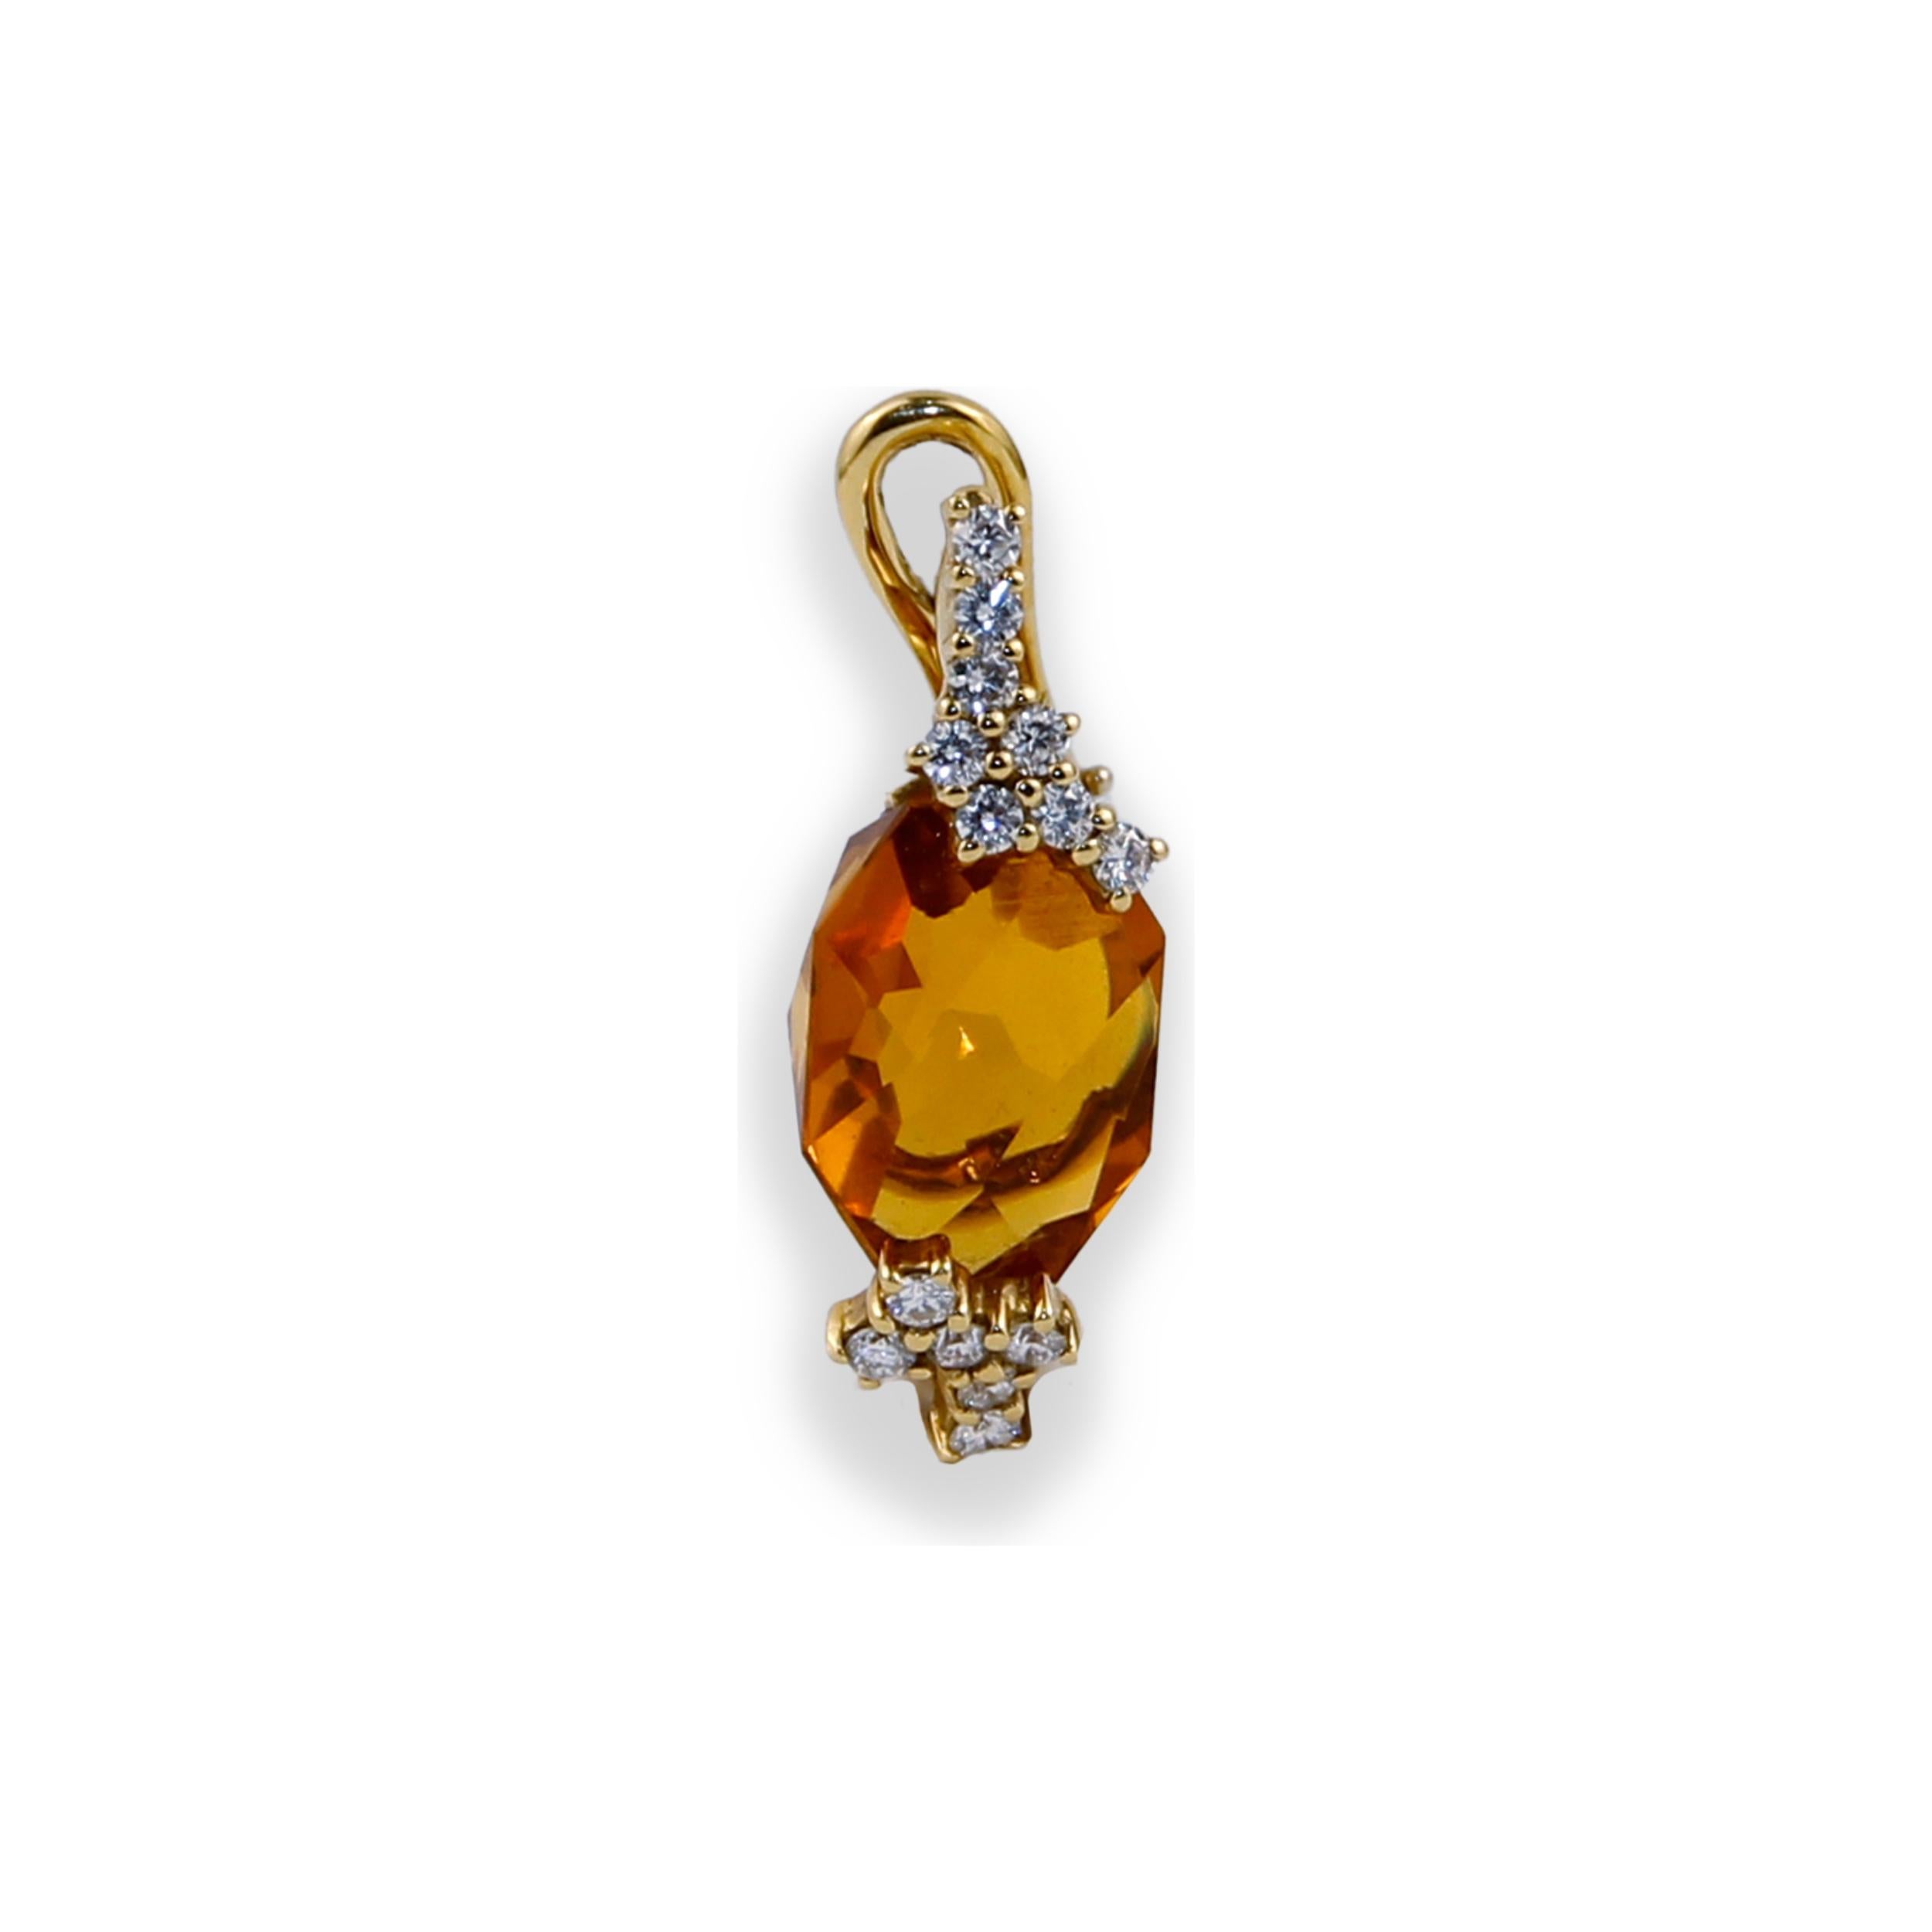 18K Yellow Gold
Diamond: 0.86ctw
SKU: BLU01753
Model number: R0269B802-CIT
Retail price: $12,850.00